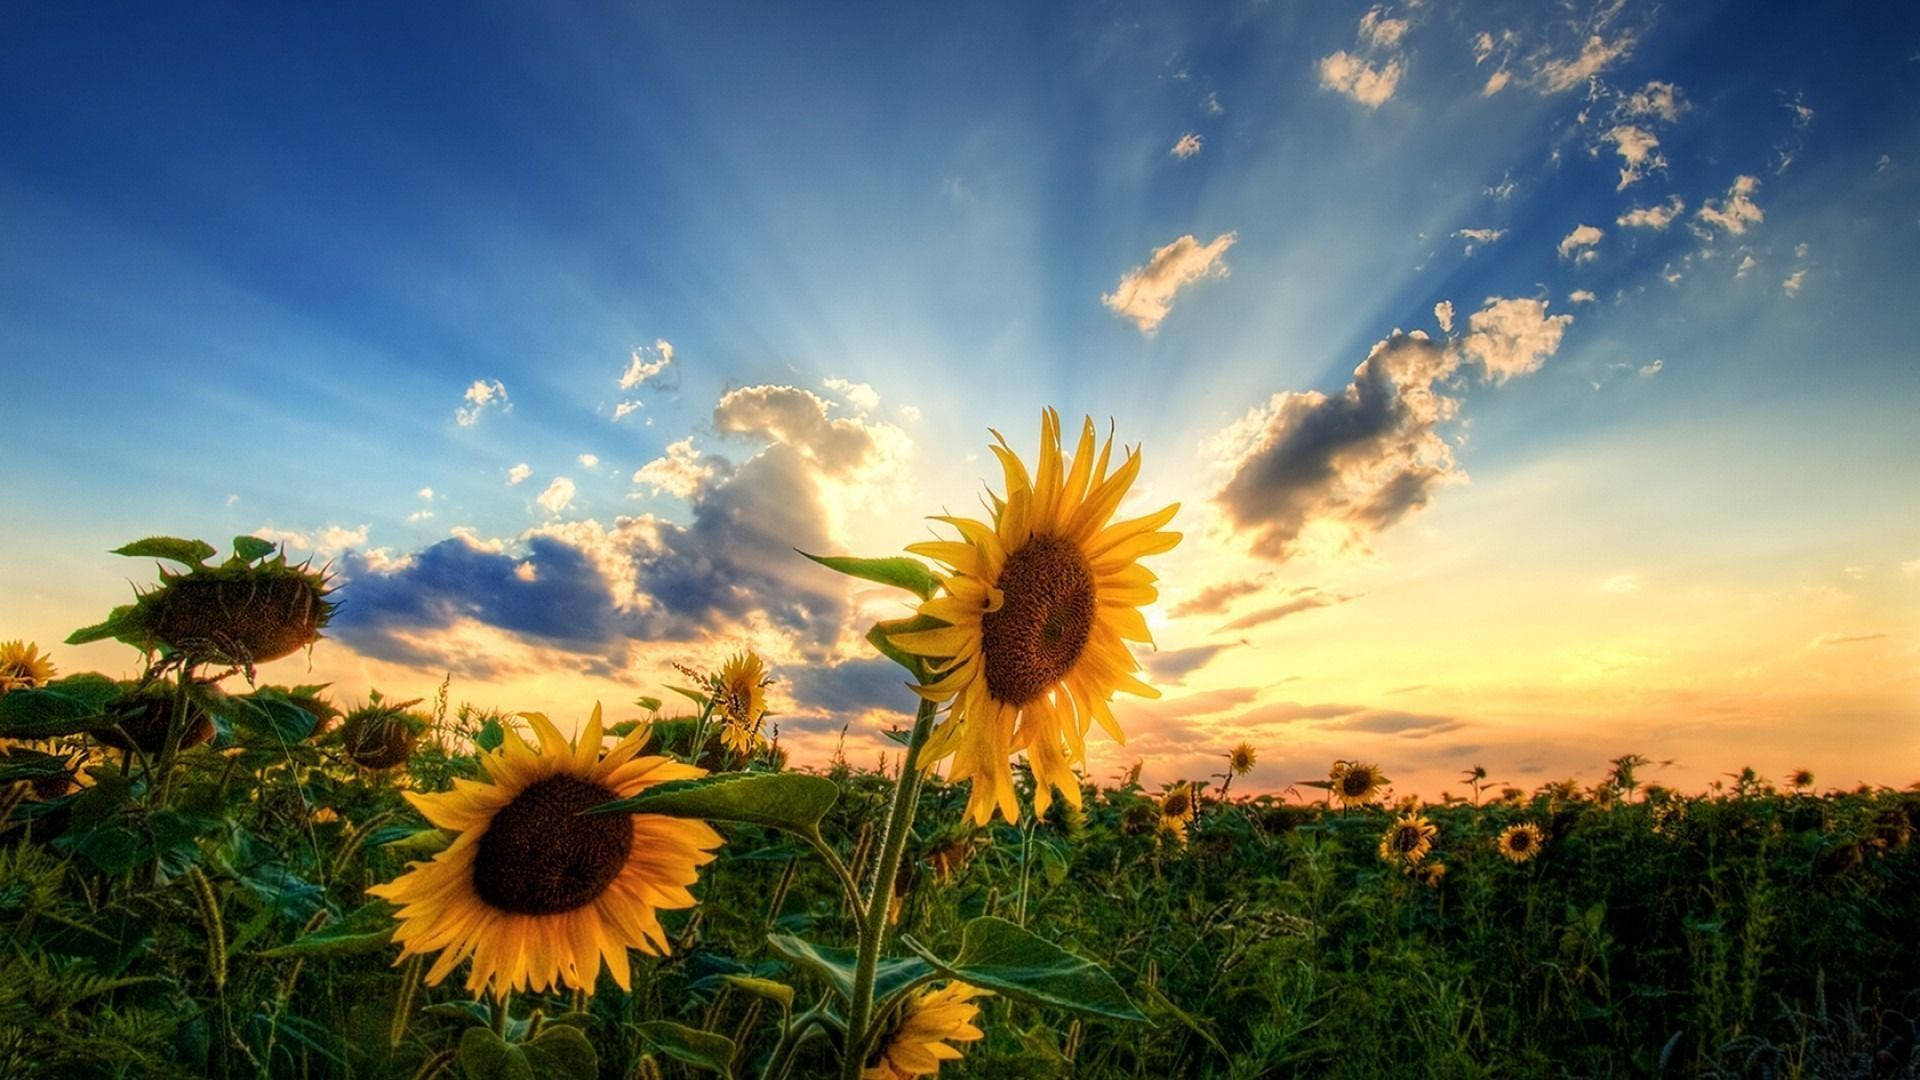 Sunflowers In Summer Sunset Wallpaper